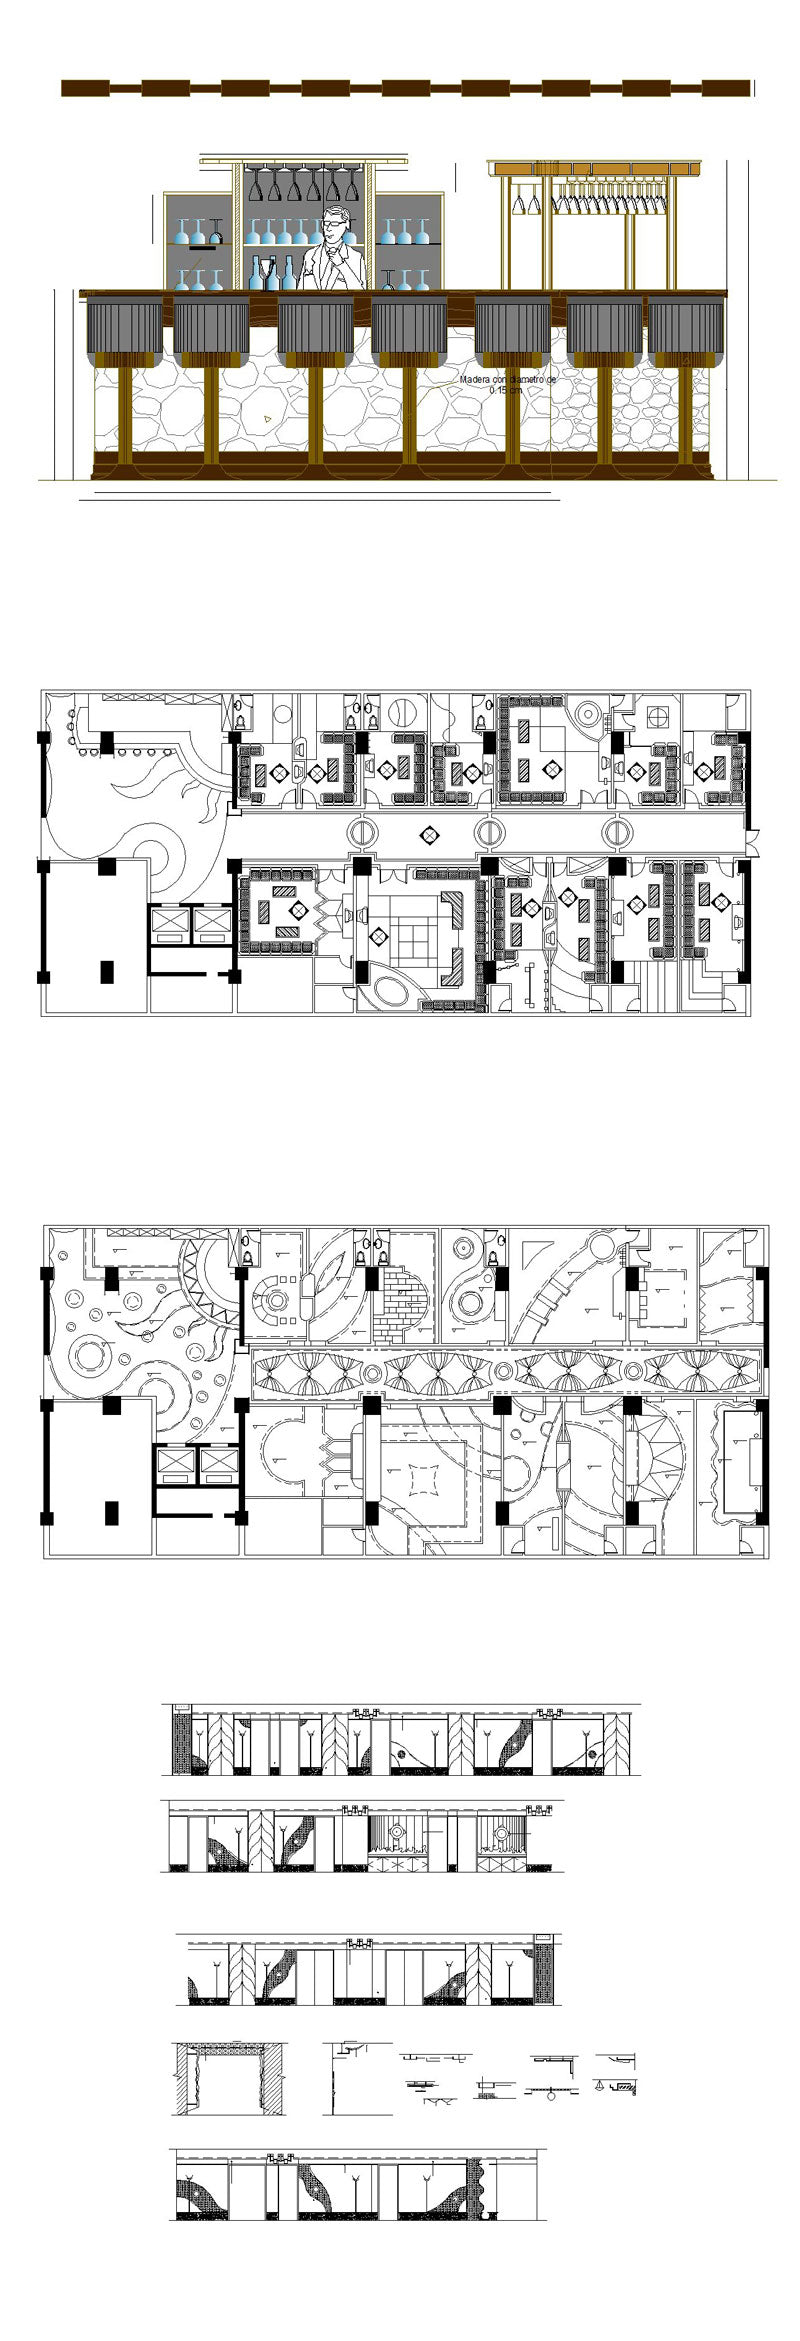 ★【Pub,Bar,Restaurant CAD Design Drawings V.1】@Pub,Bar,Restaurant,Store design-Autocad Blocks,Drawings,CAD Details,Elevation